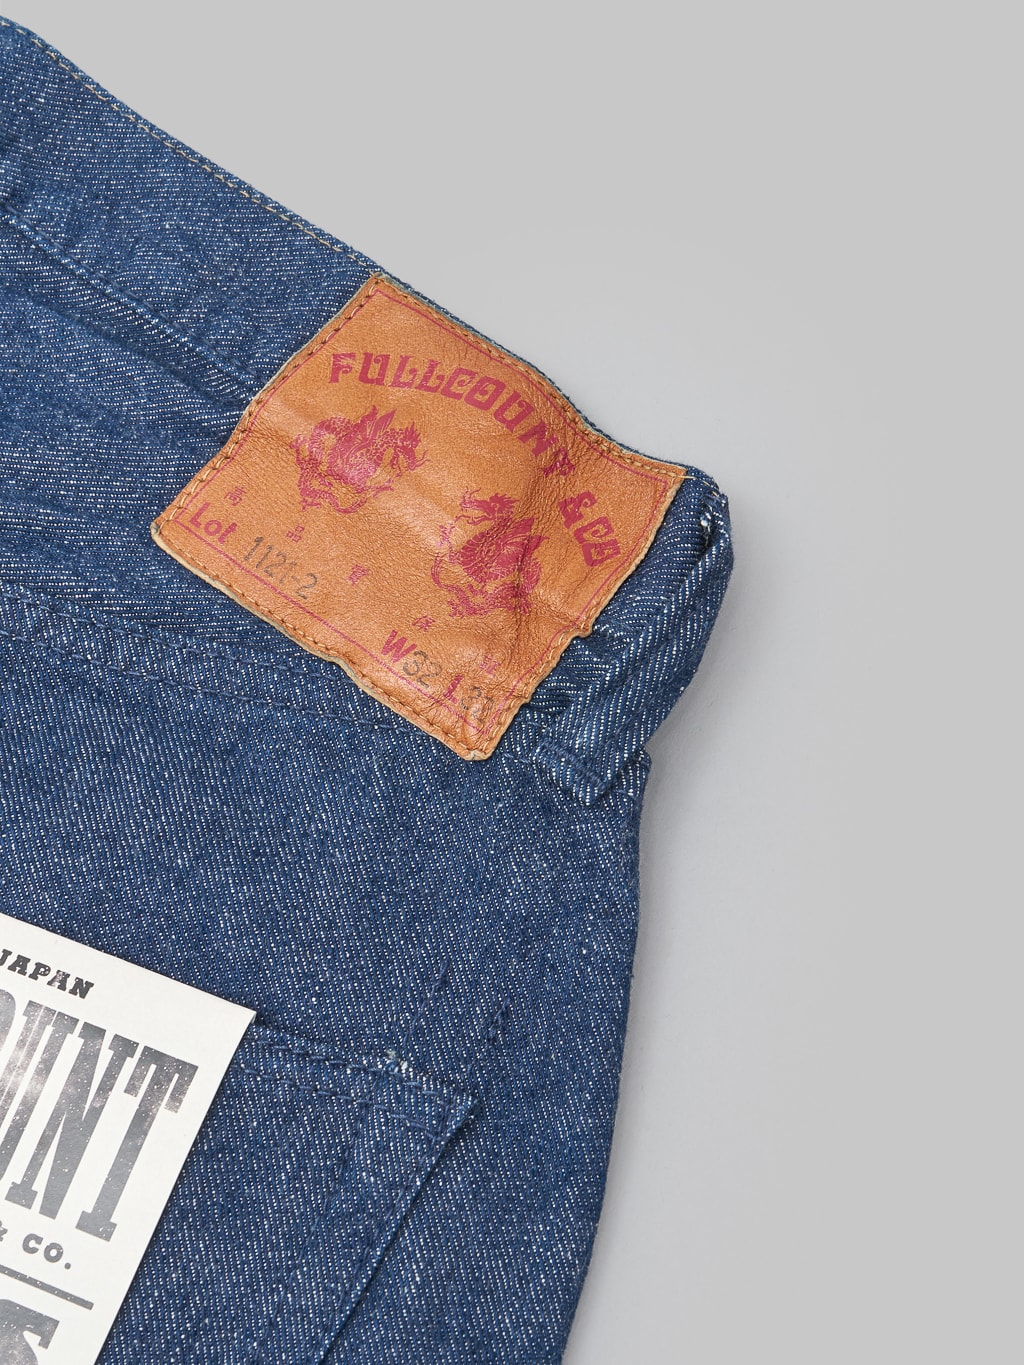 fullcount 1121 duke original selvedge denim super wide jeans leather patch